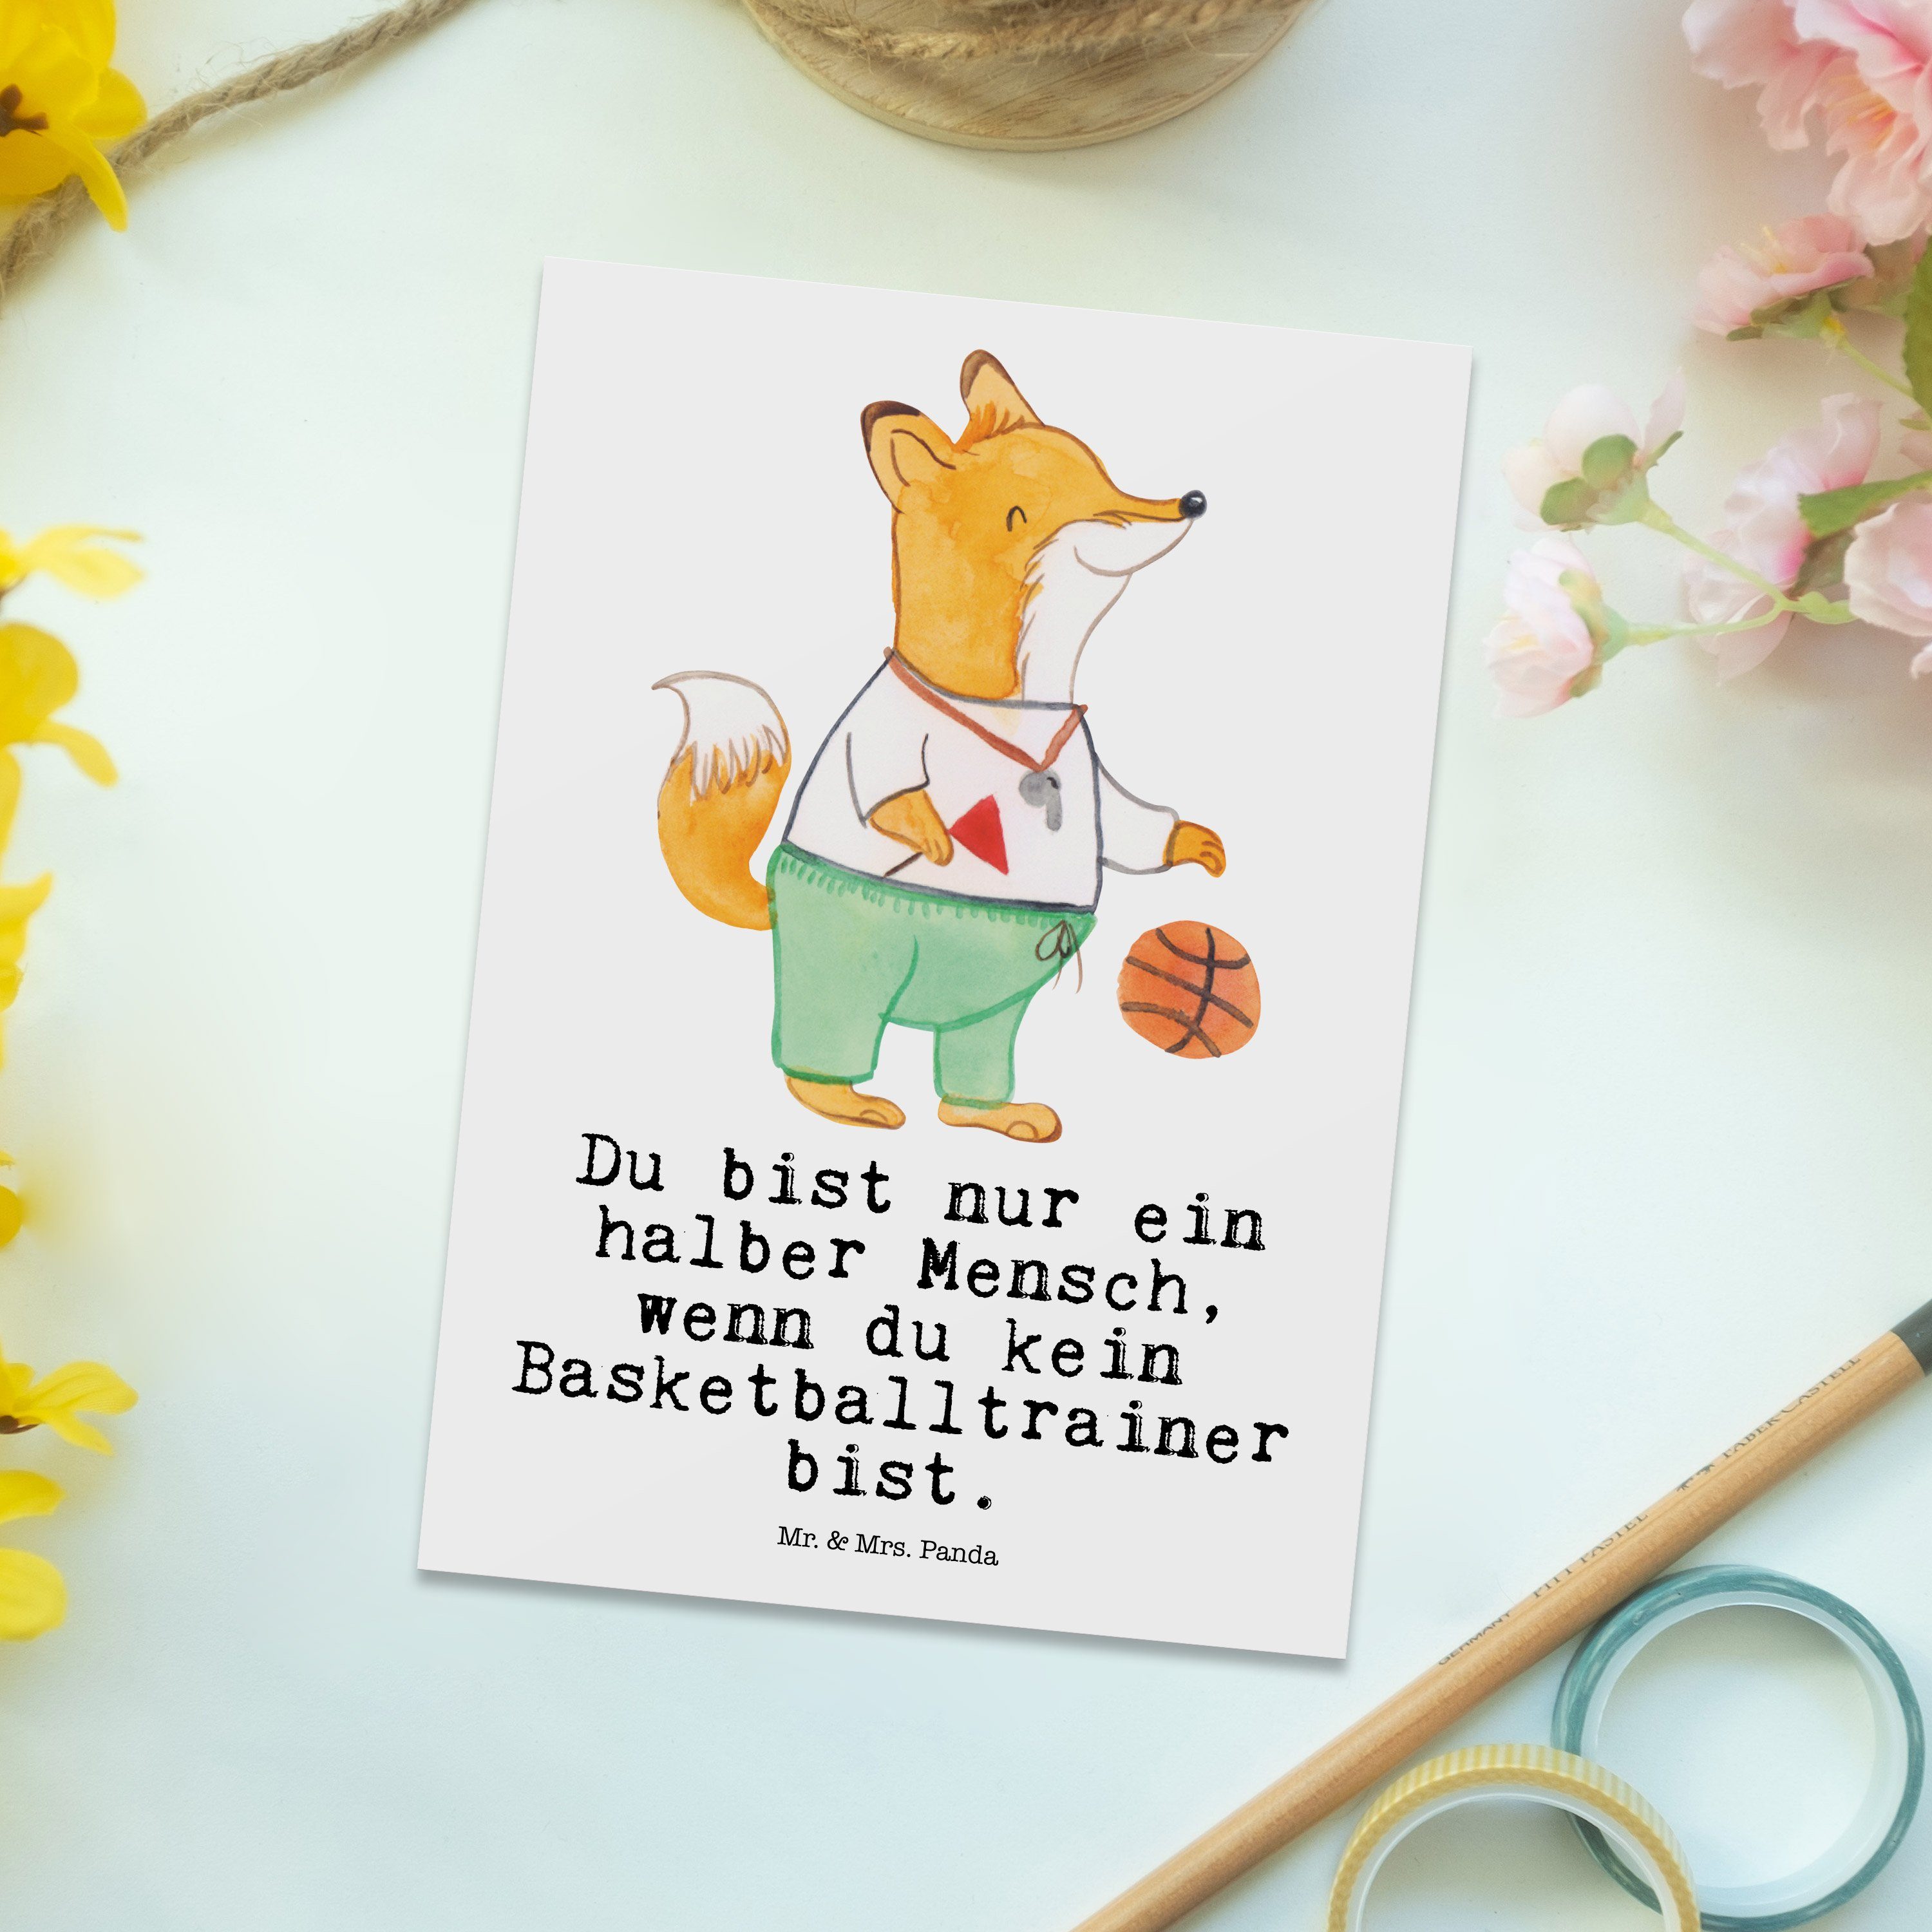 Mr. & Mrs. Panda Weiß Postkarte Da Basketballer, Basketballtrainer - mit Firma, - Geschenk, Herz